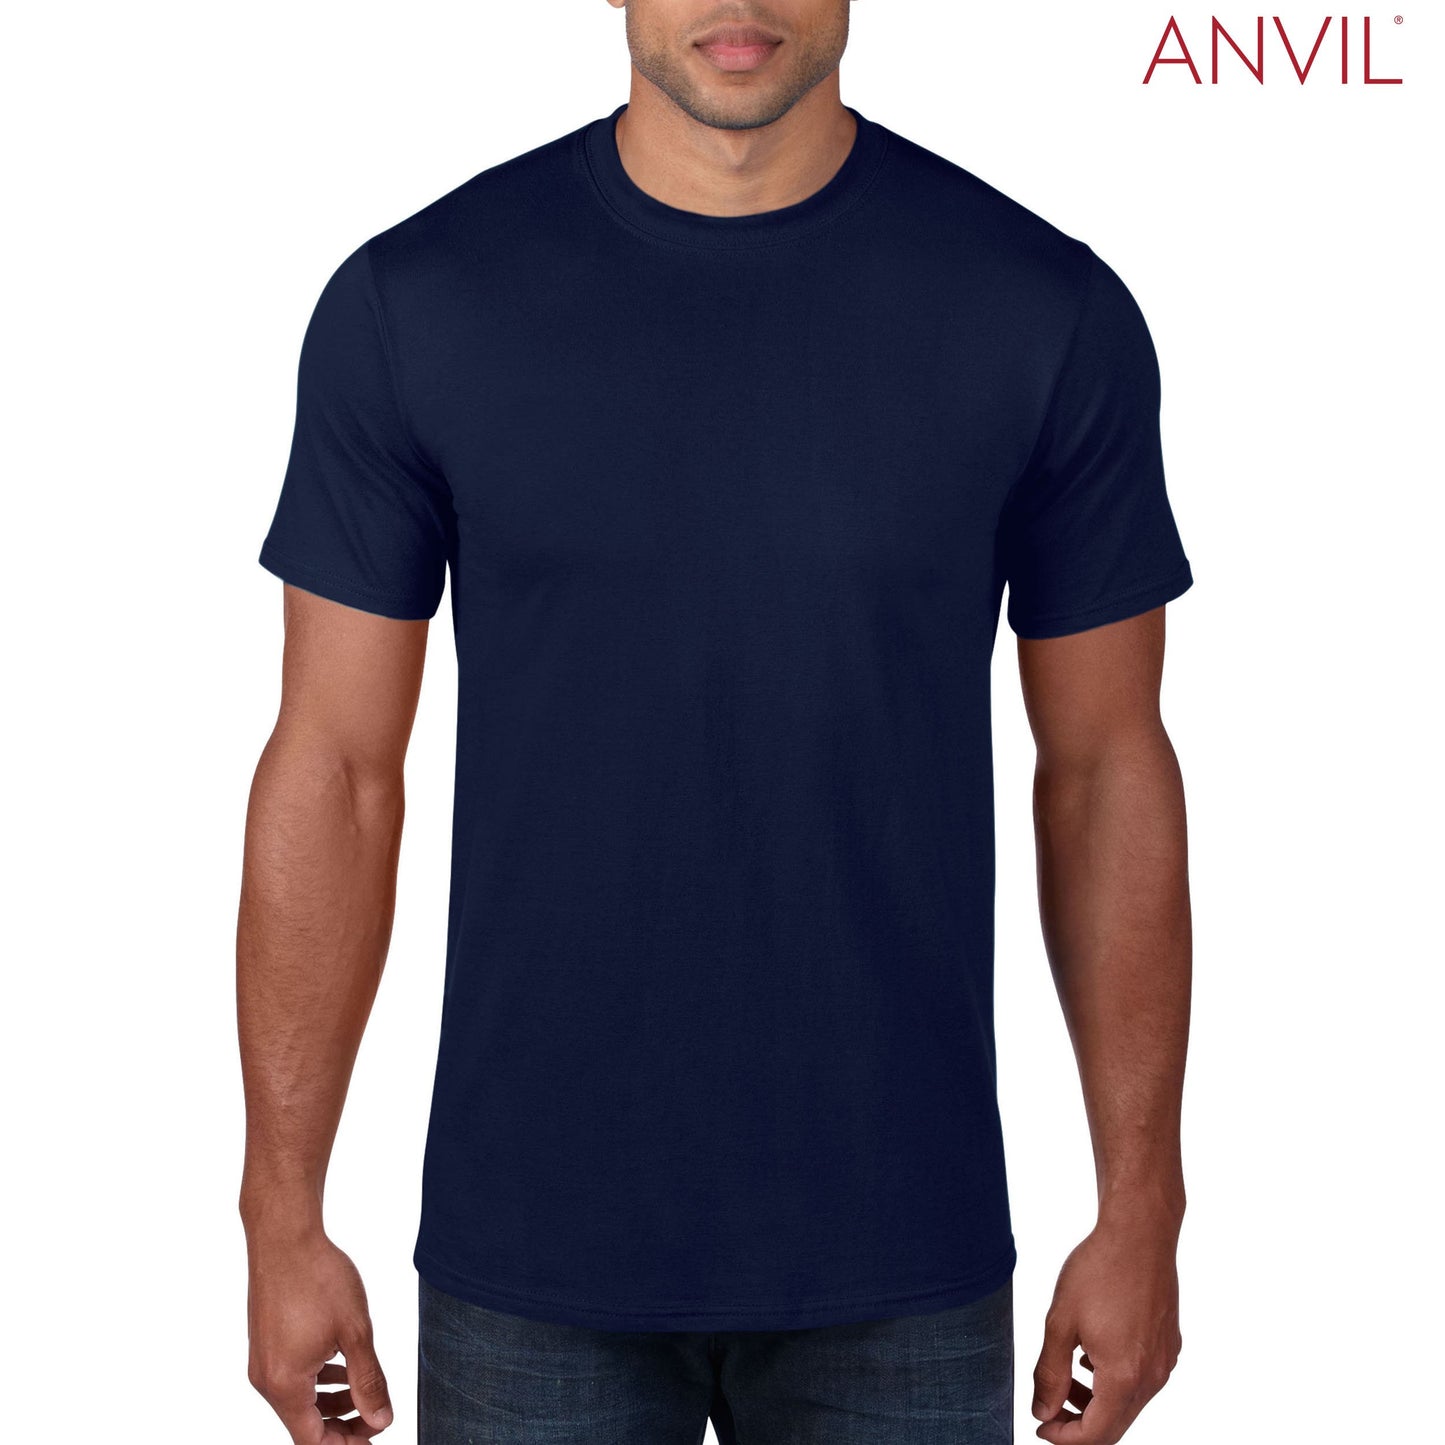 790 Anvil Adult Urban T-Shirt